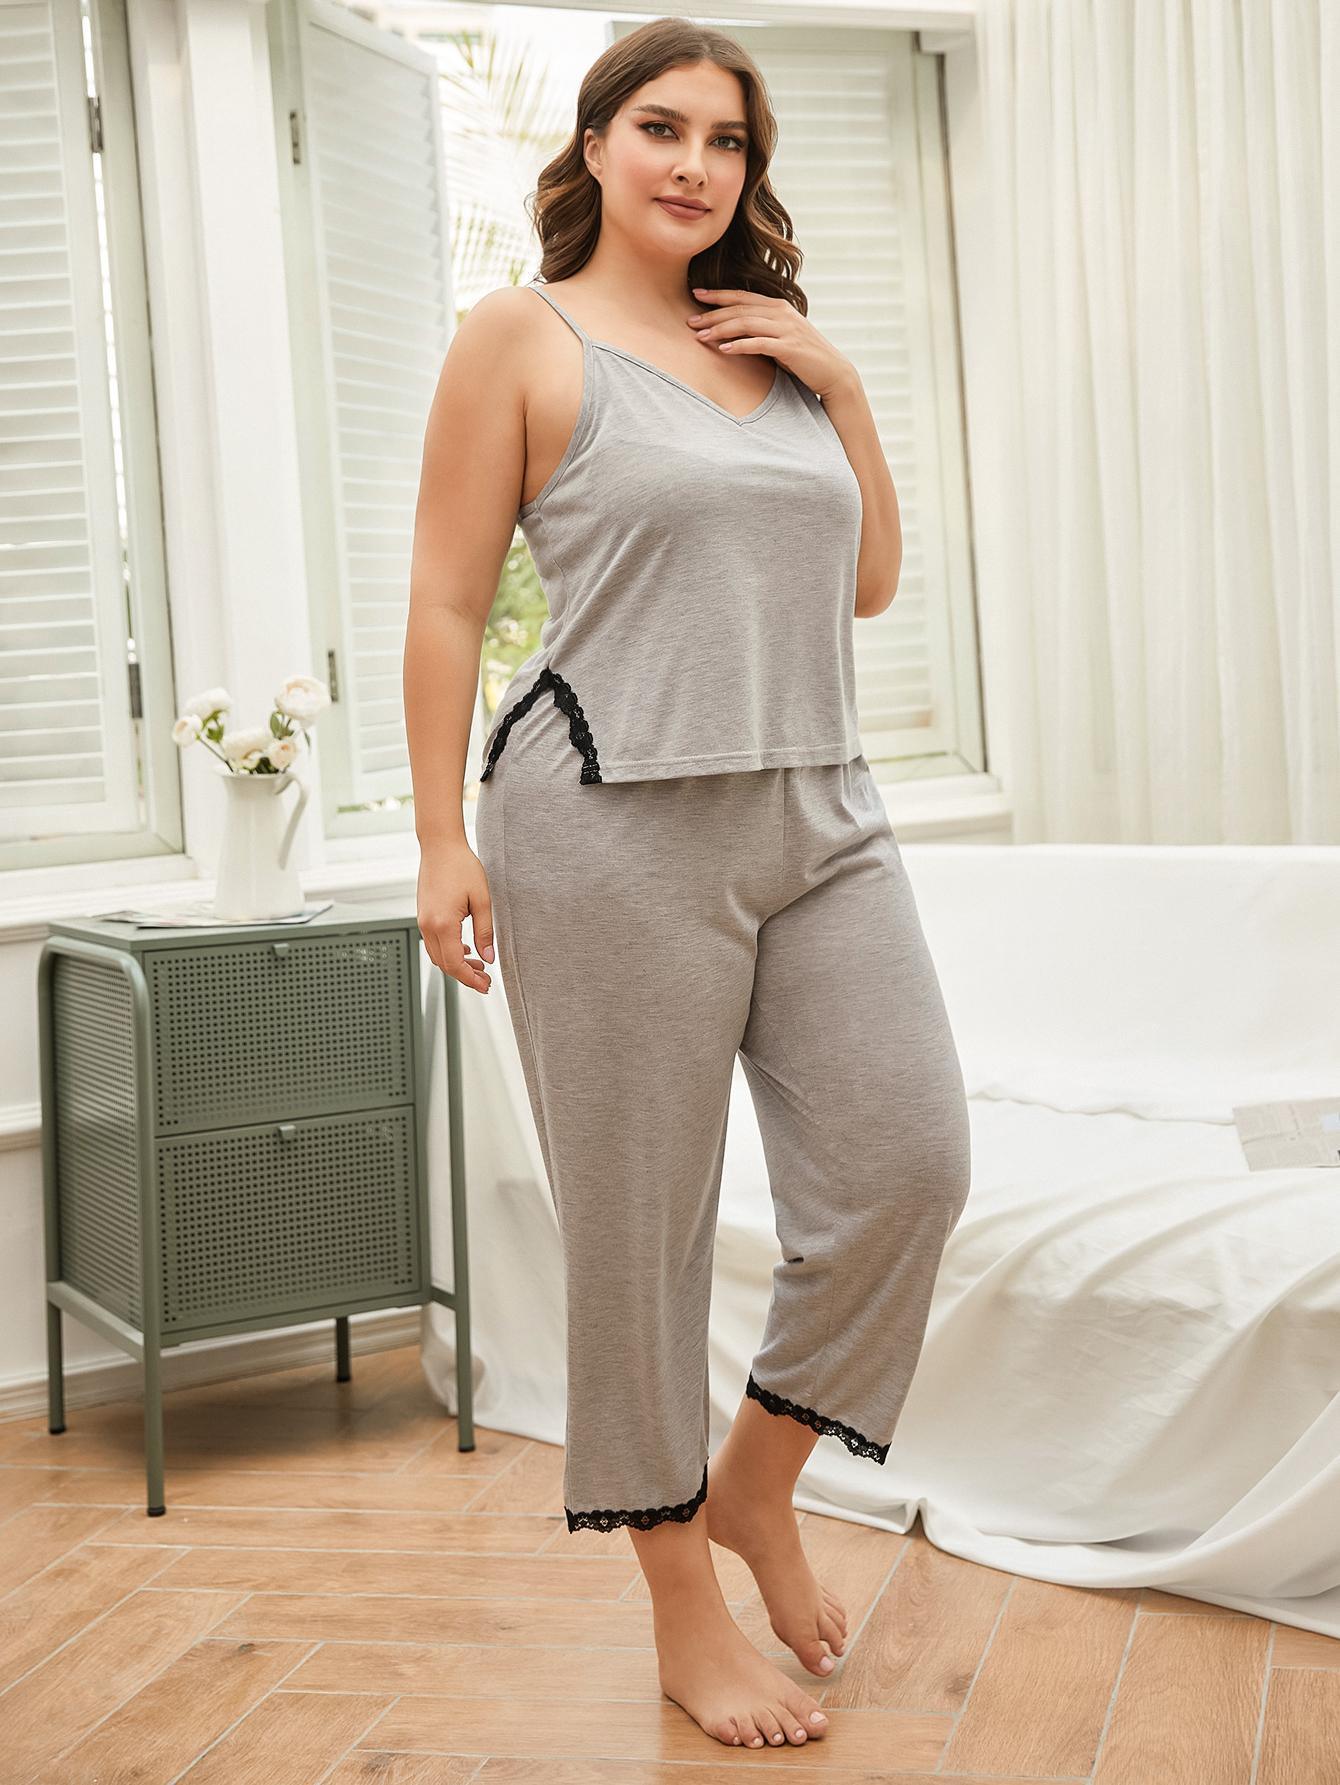 Women's Sleepwear/Loungewear Plus Lace Cami Pajama Set